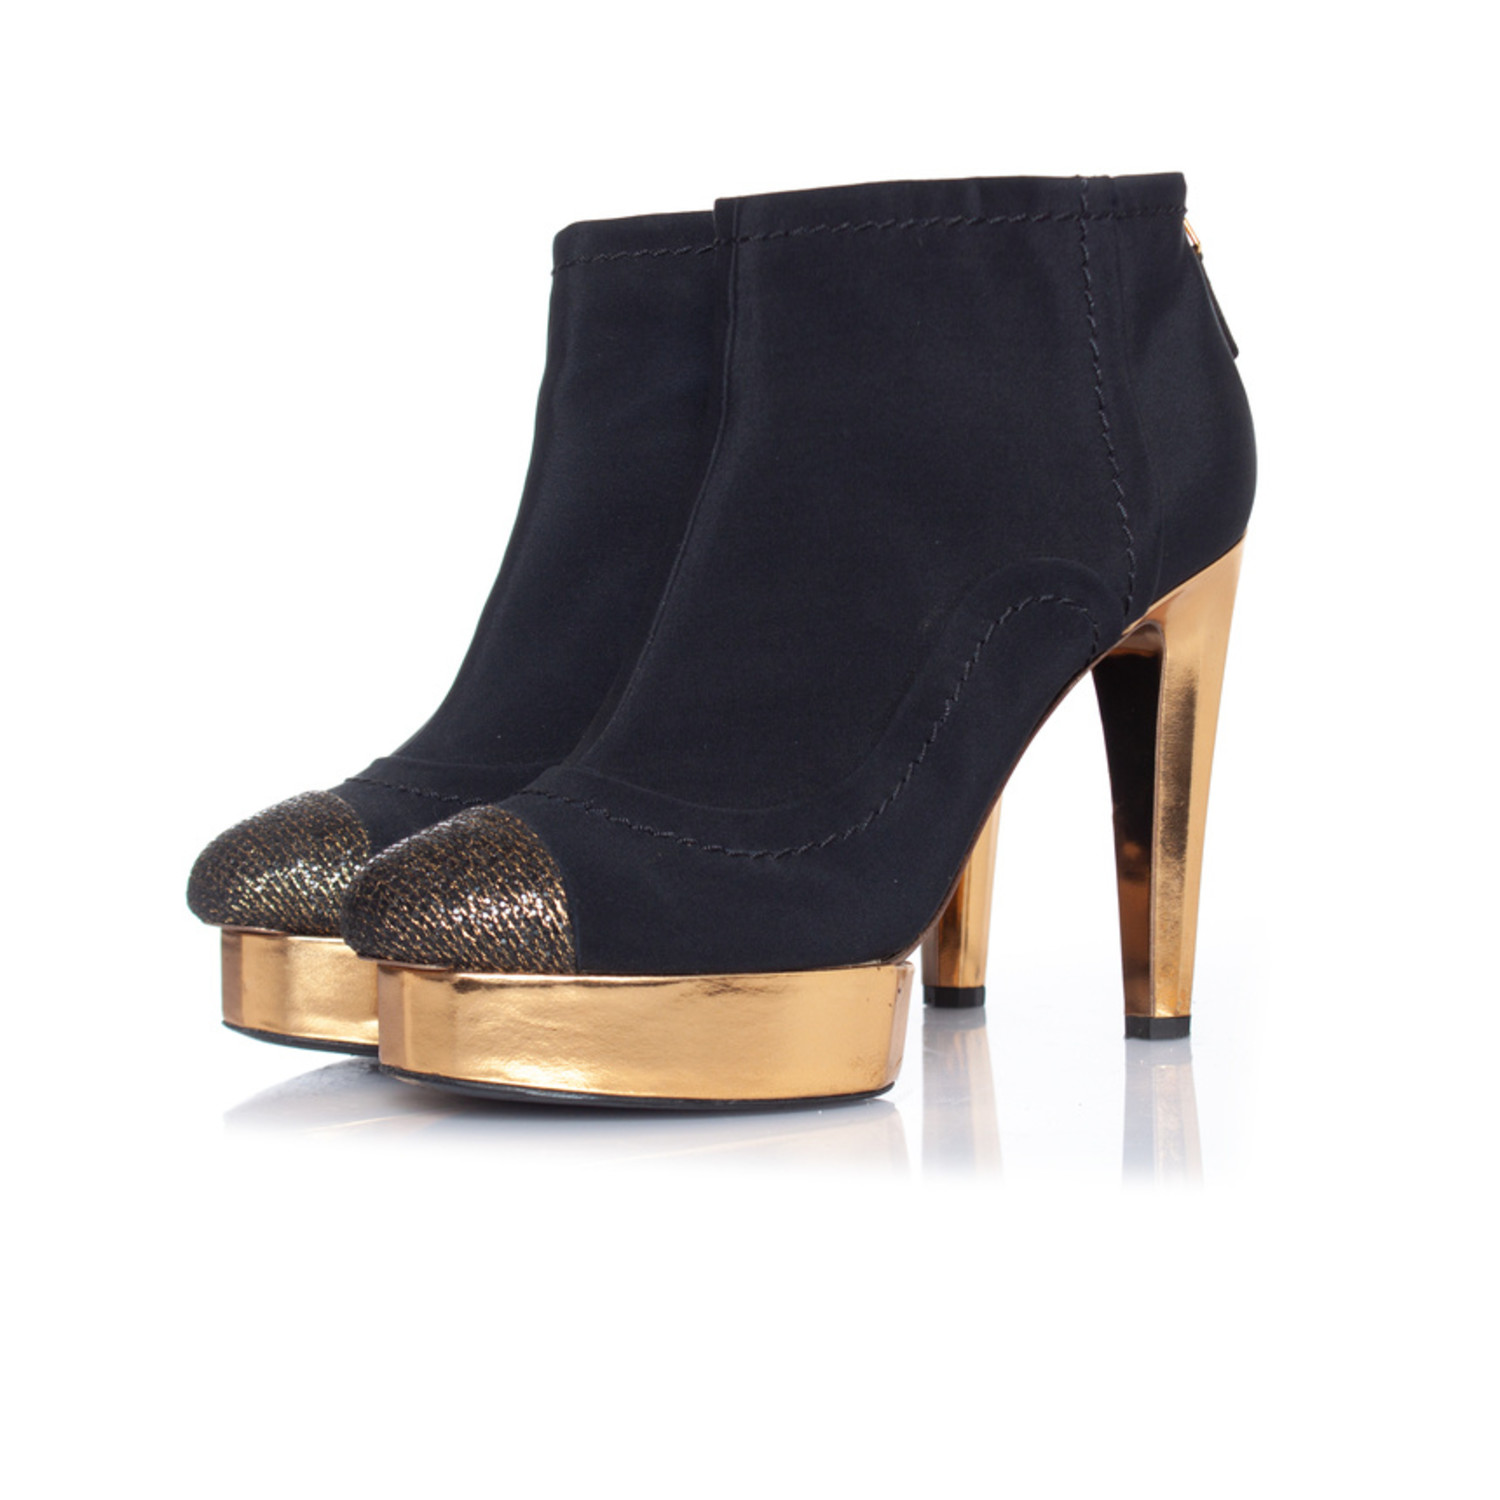 Chanel, Black ankle platform boots with gold heel - Unique Designer Pieces